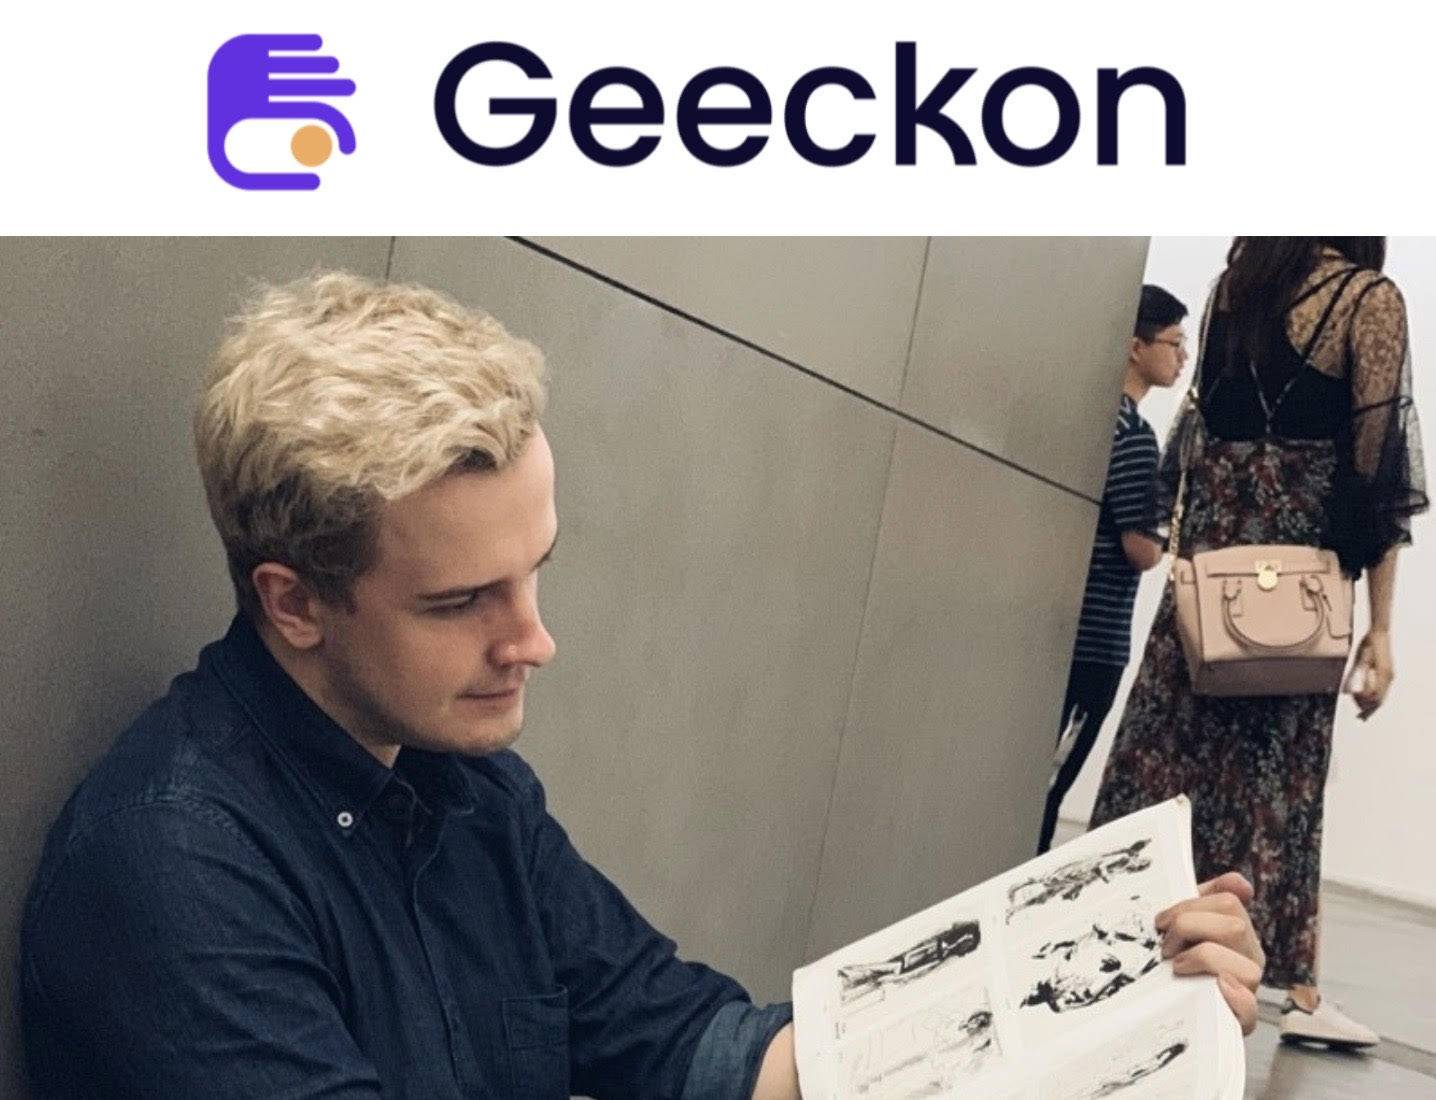 Geeckon company logo and founder